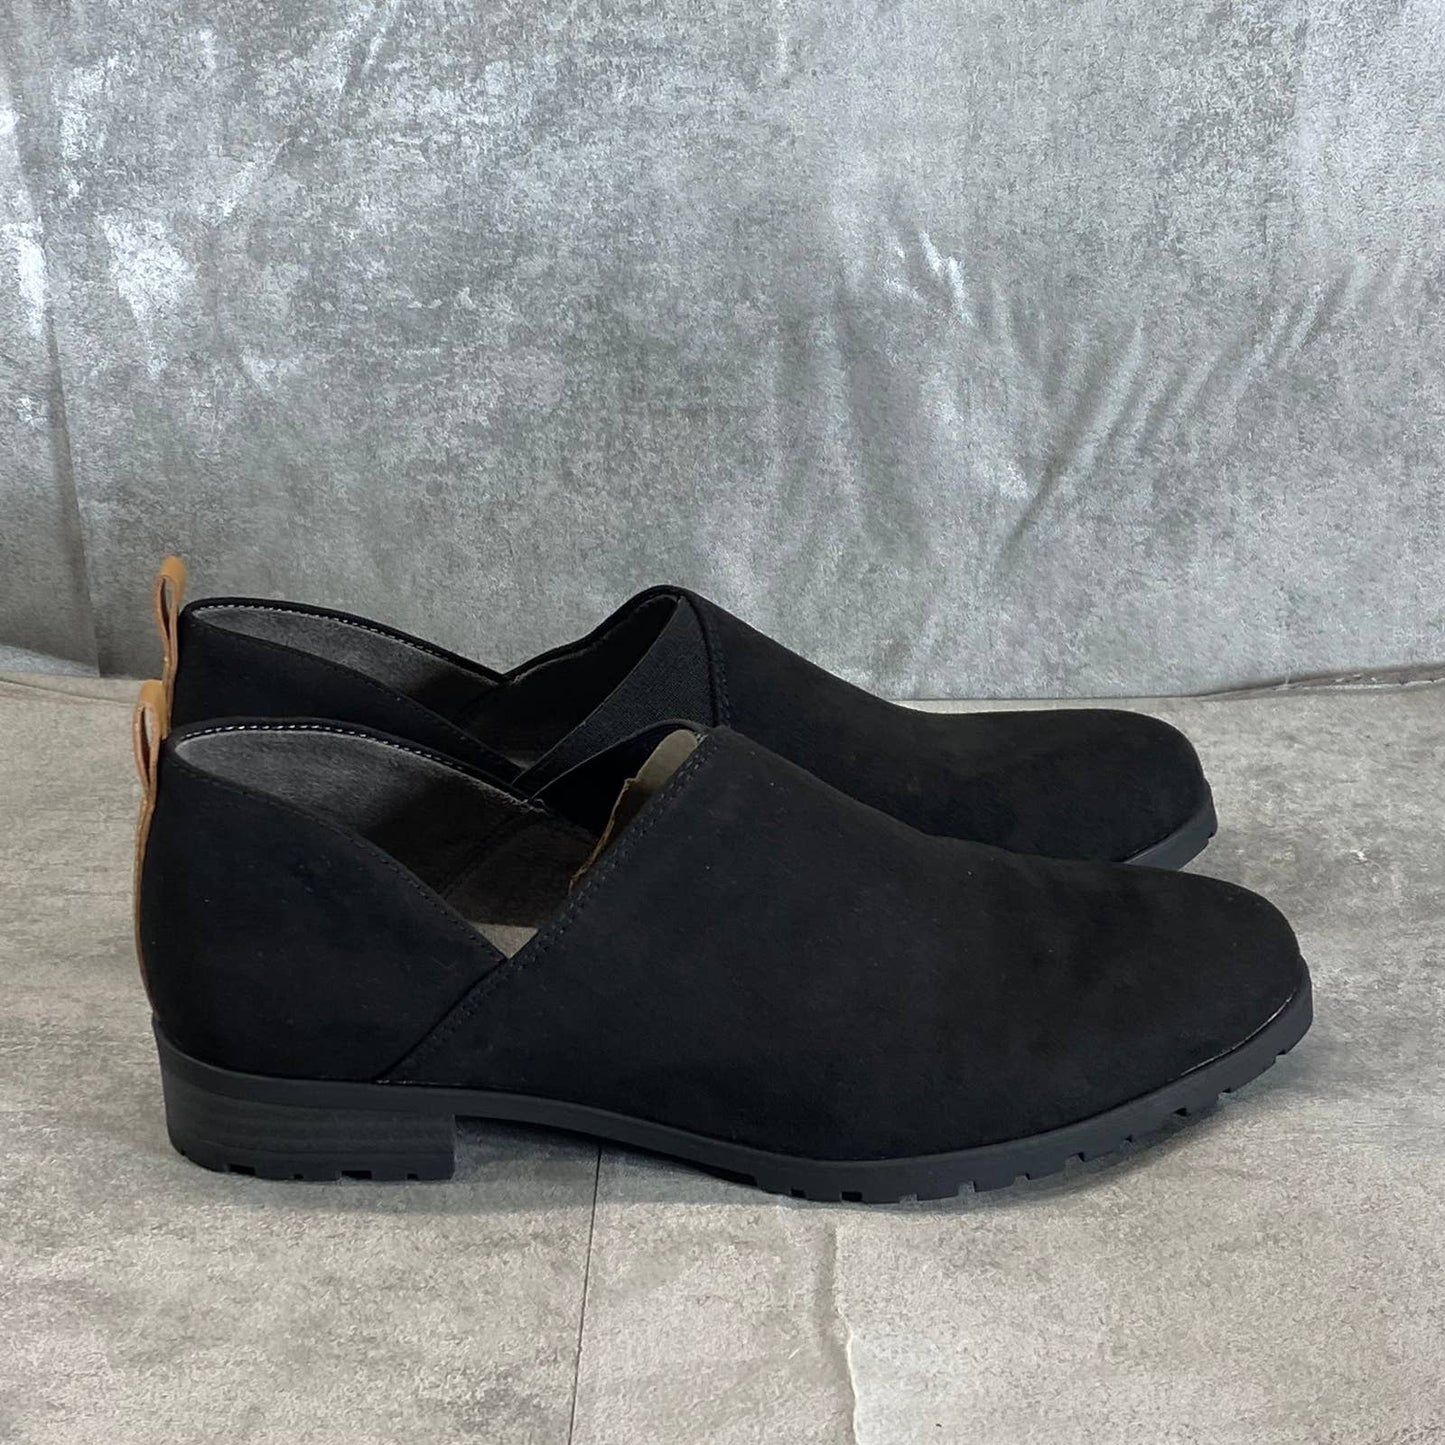 DR. SCHOLL'S Black Fabric Retrogade Round-Toe Lug-Sole Slip-On Shoes SZ 7.5